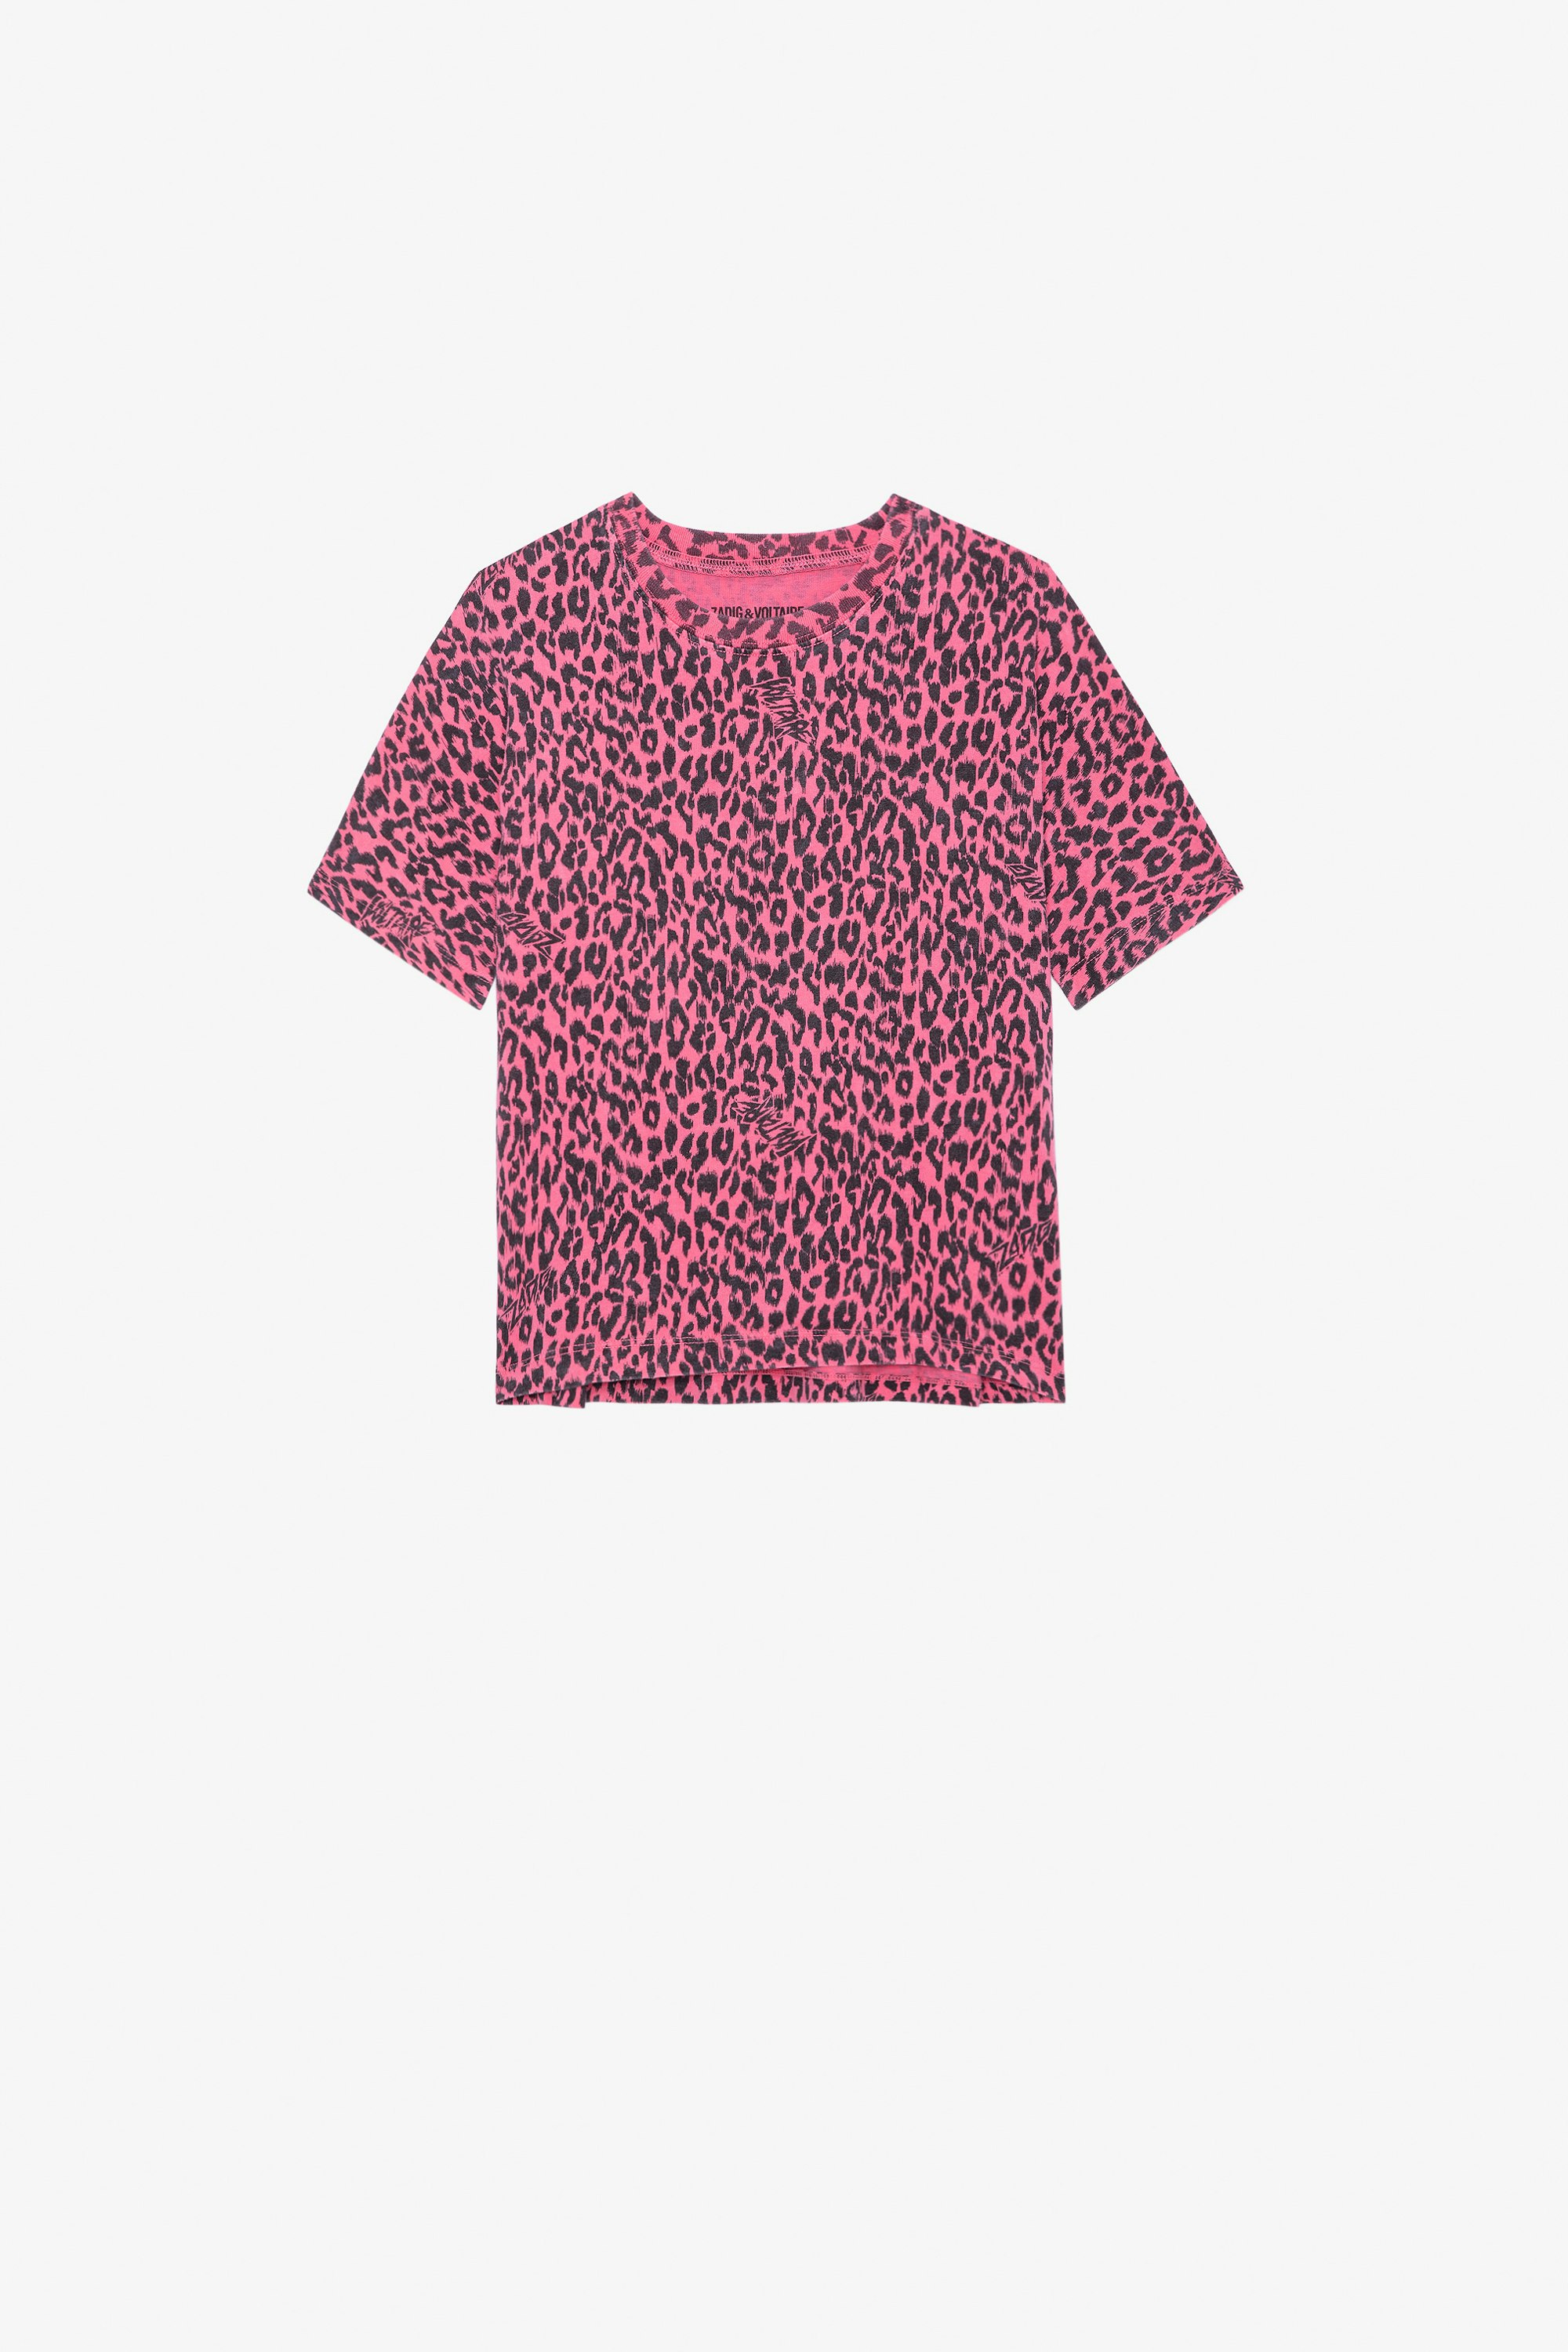 Porter Leopard Girls' T-Shirt - Girls' cotton t-shirt with all over leopard print.